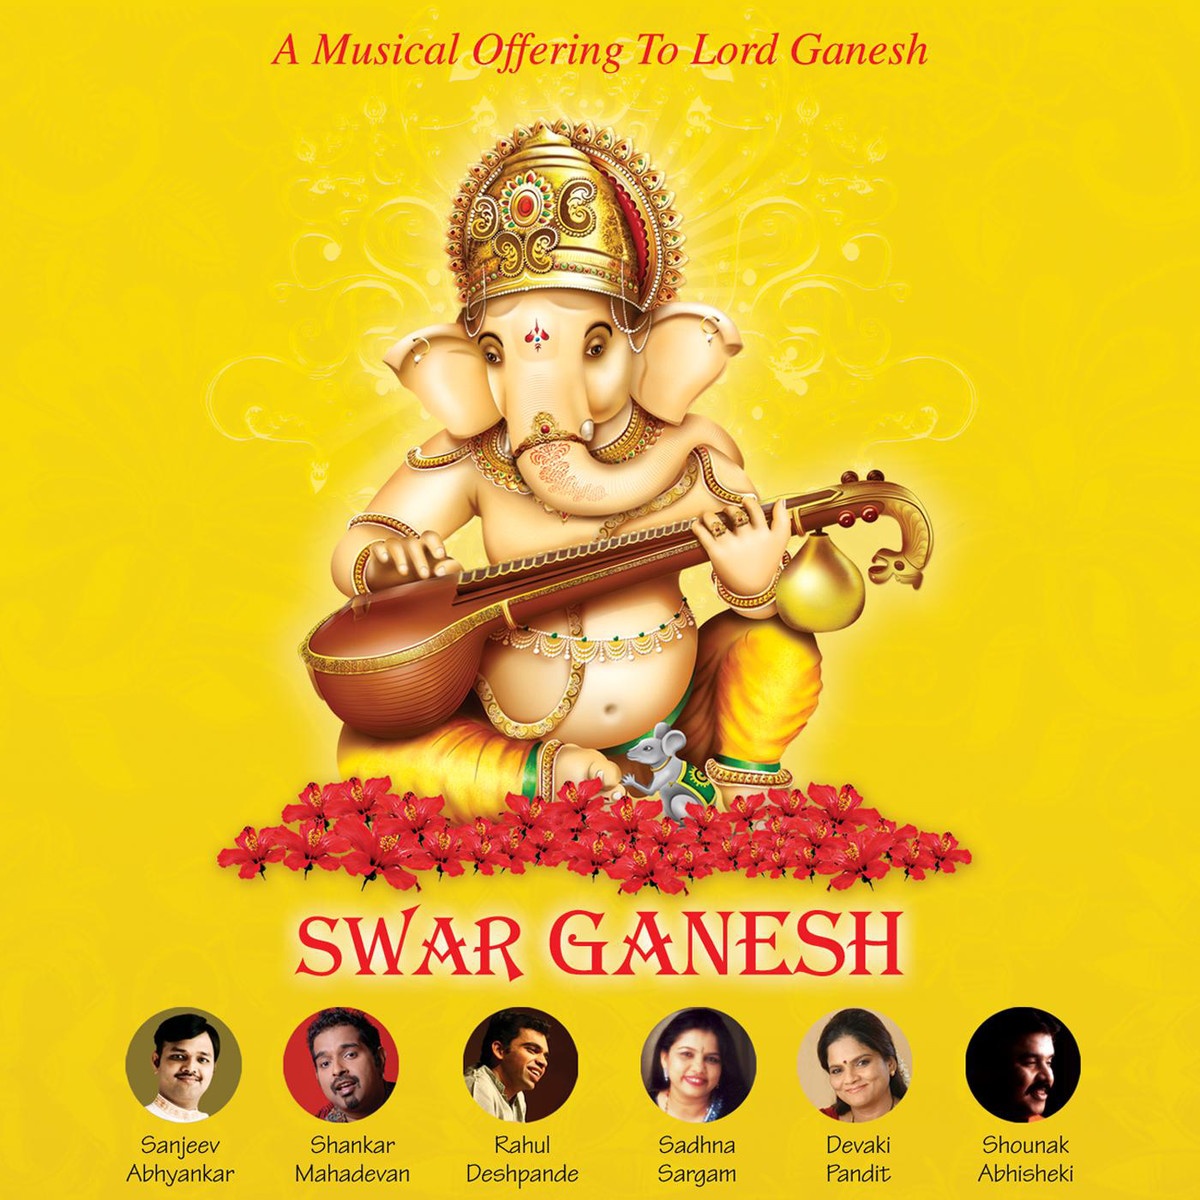 Srujan Ganesh - Chetanechi Chetana Jo